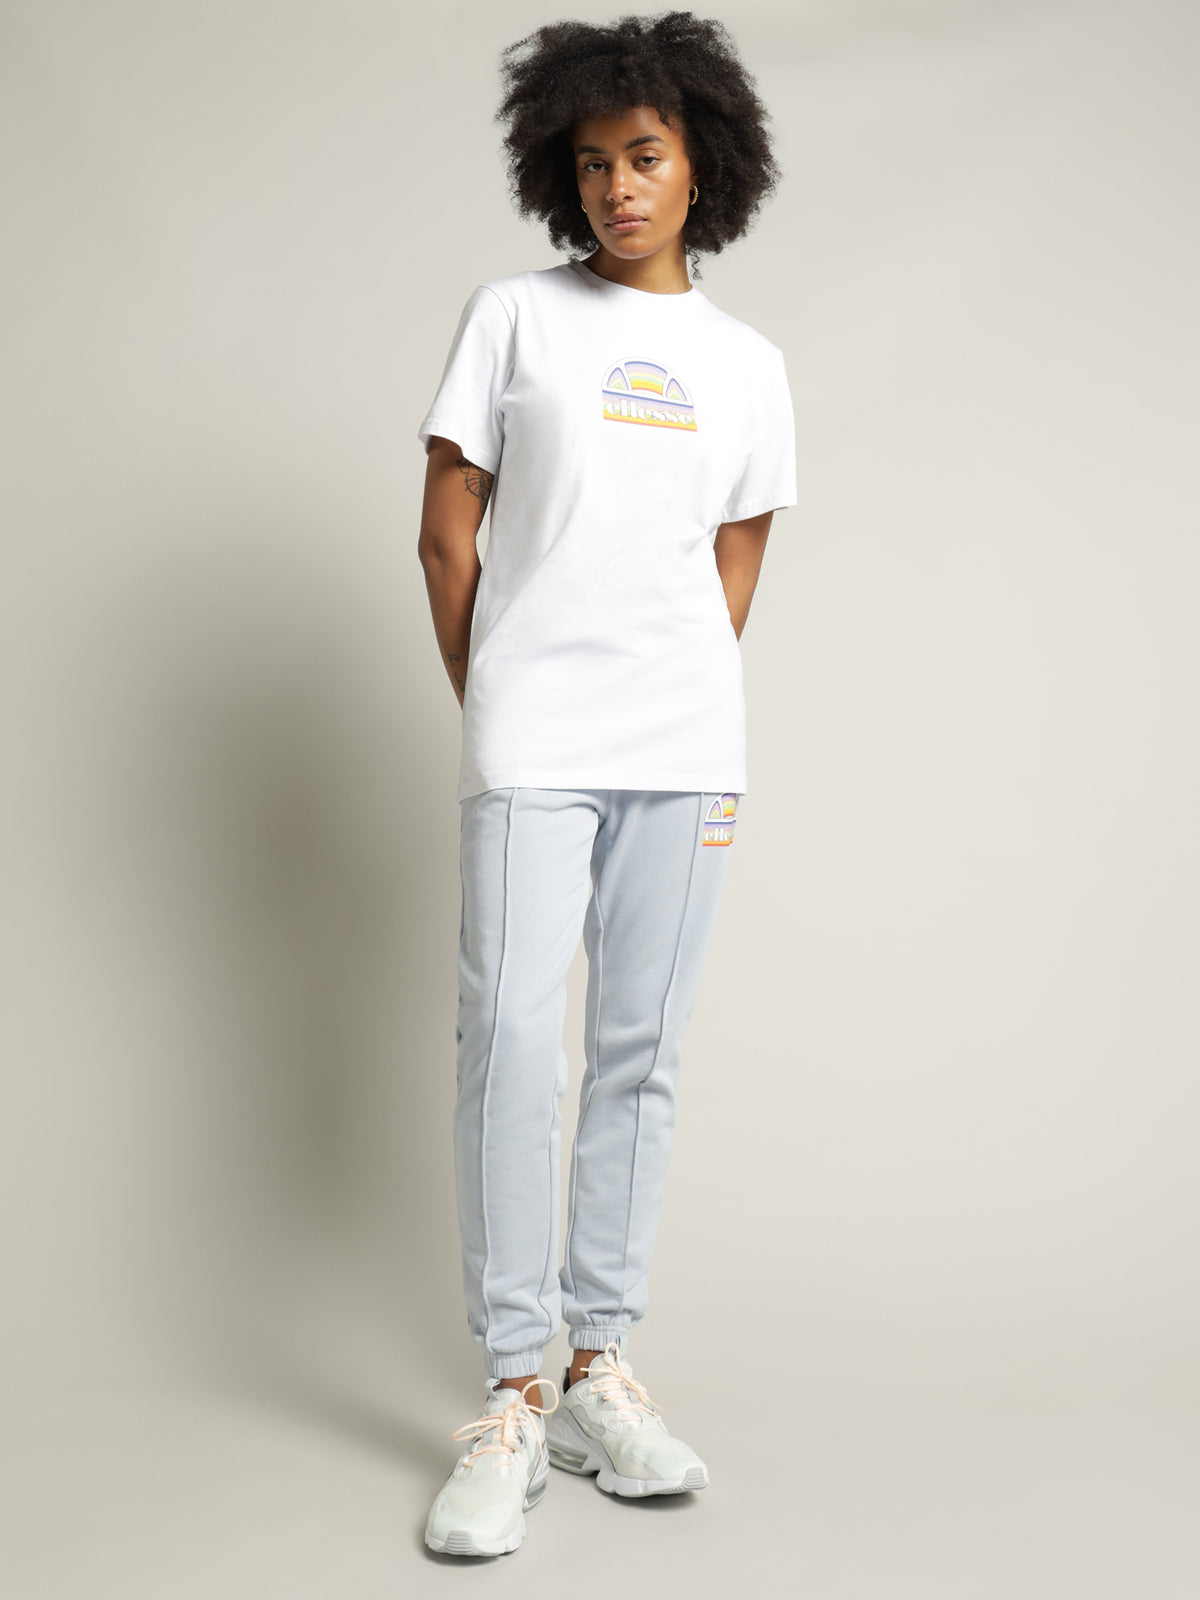 Tardi T-Shirt in White